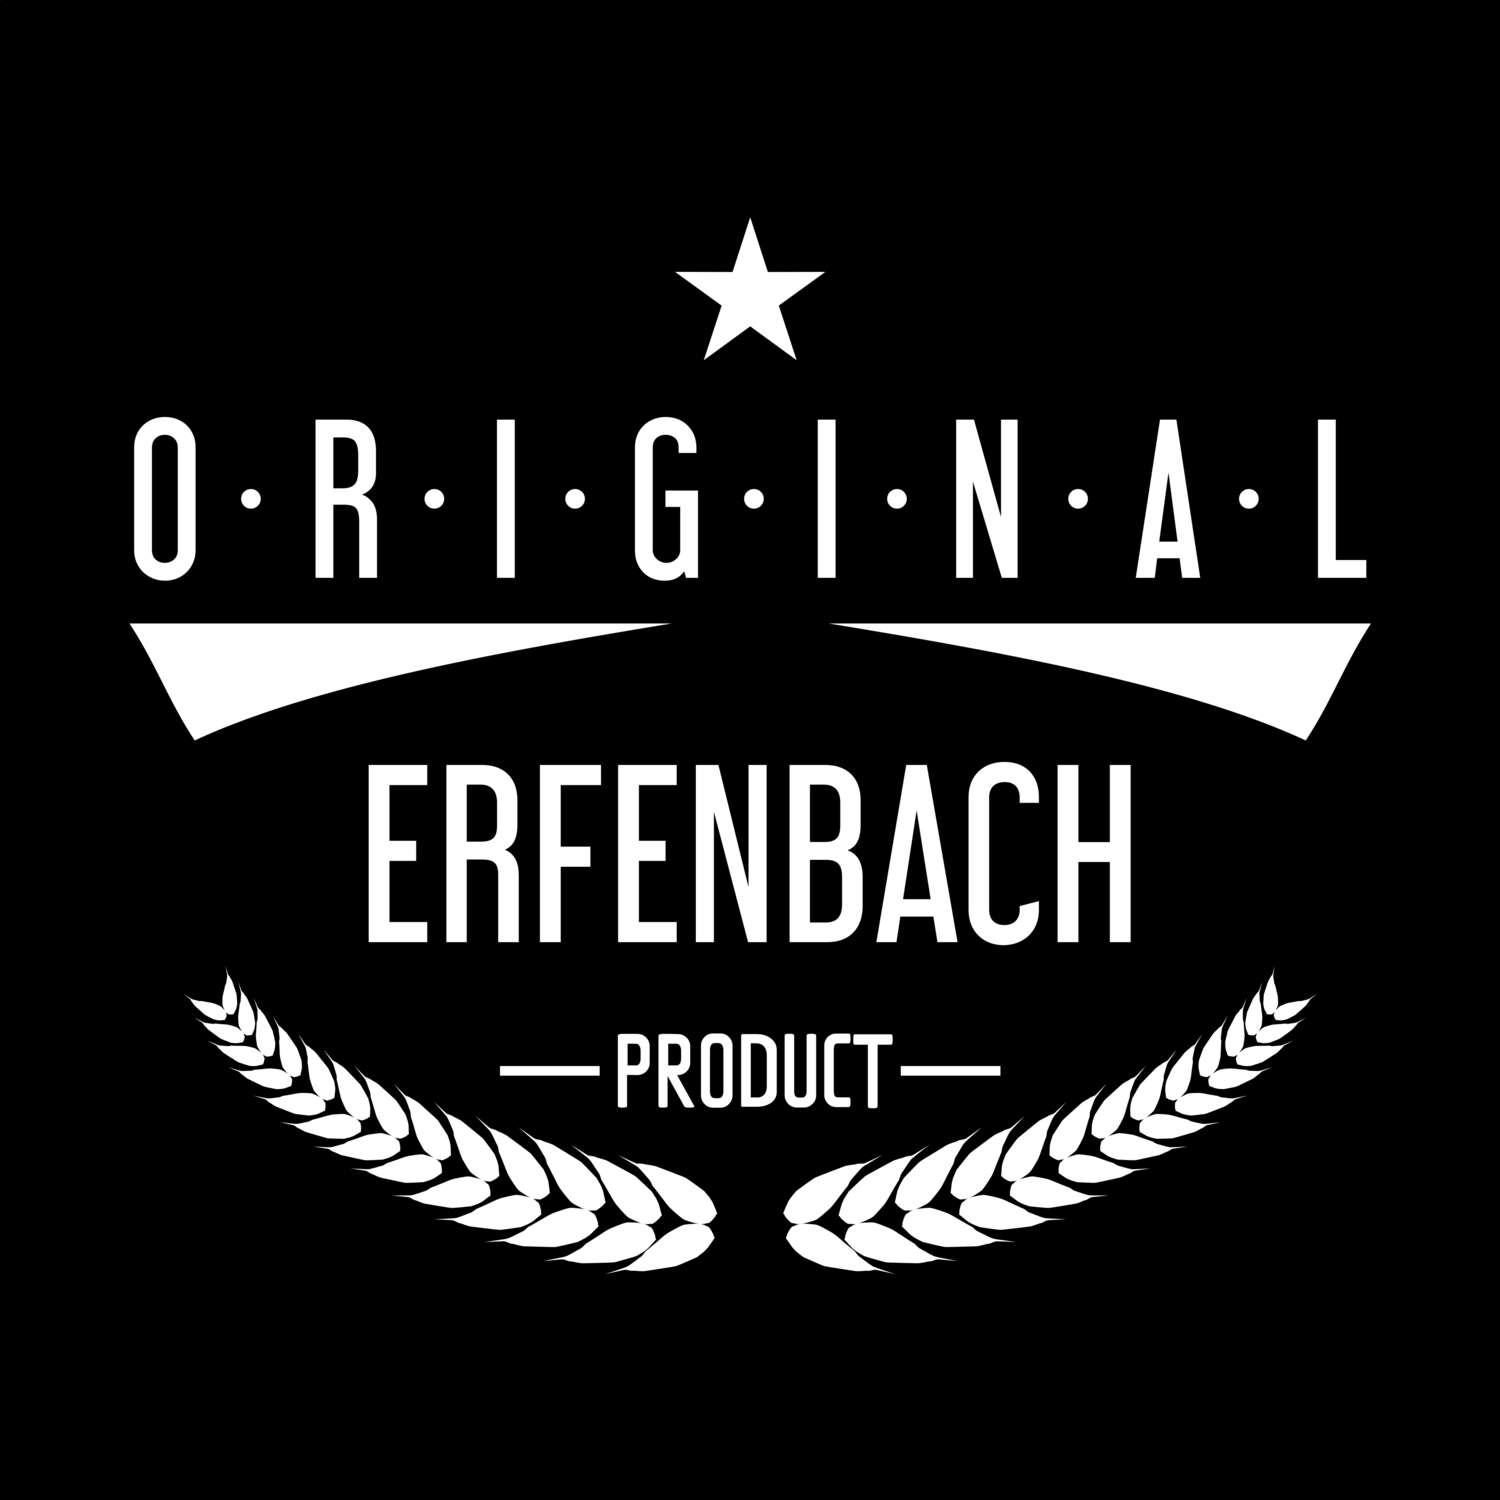 Erfenbach T-Shirt »Original Product«